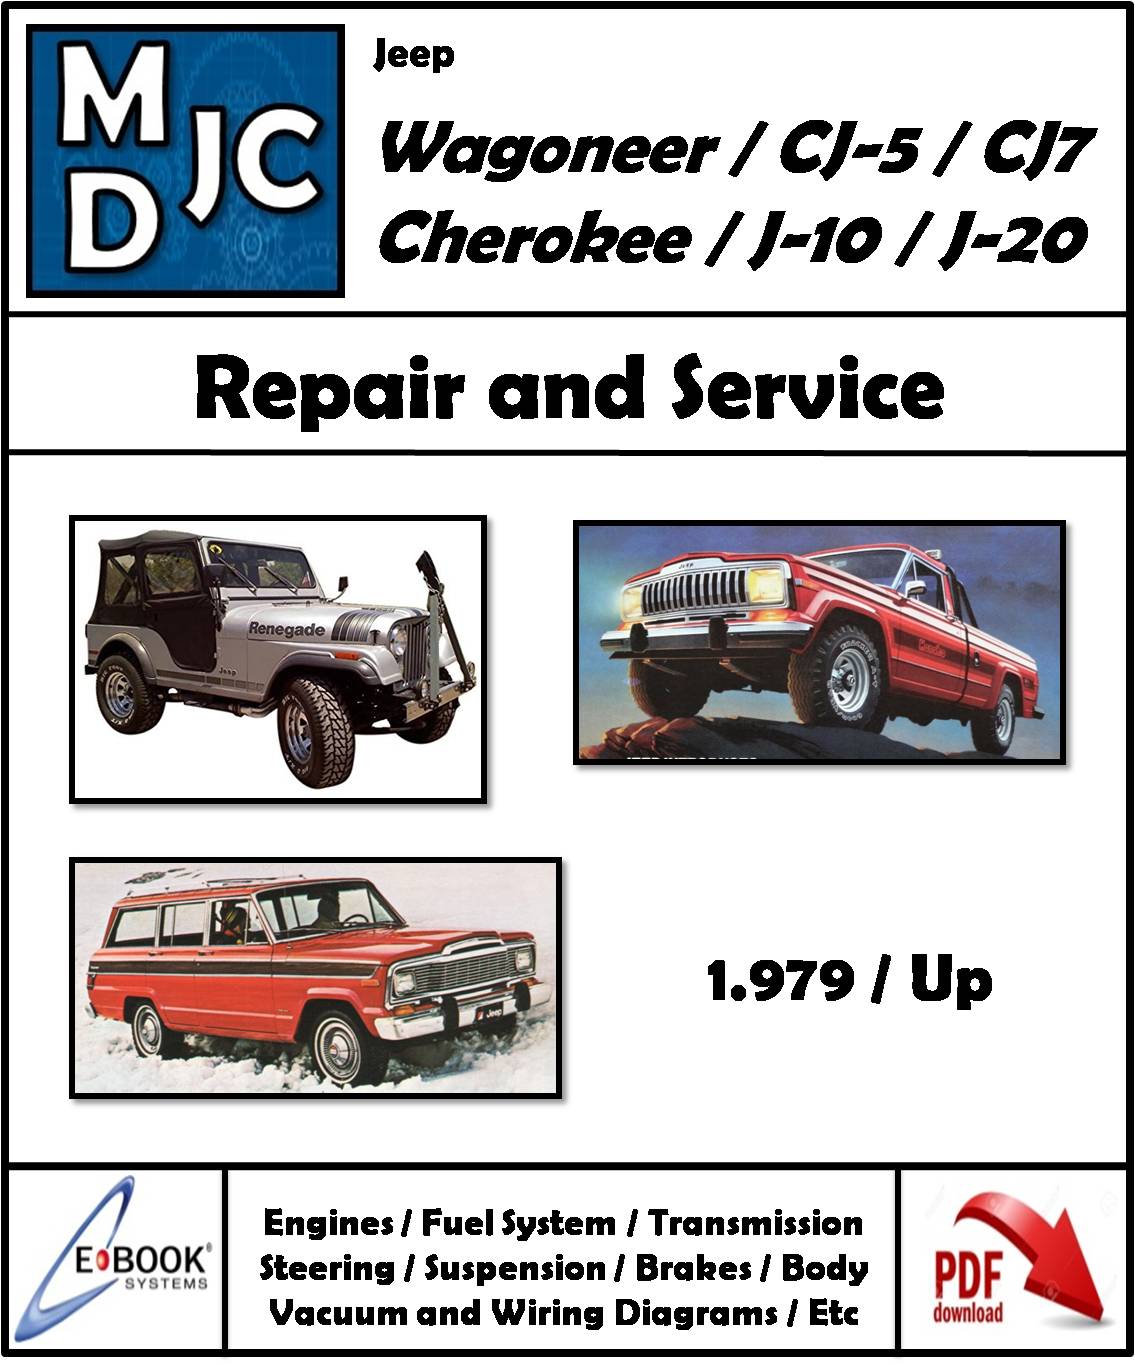 Manual de Taller Jeep Wagoneer / Cherokee / Cj-5 / Cj-7 / J-10 / J-20 1979 - Up